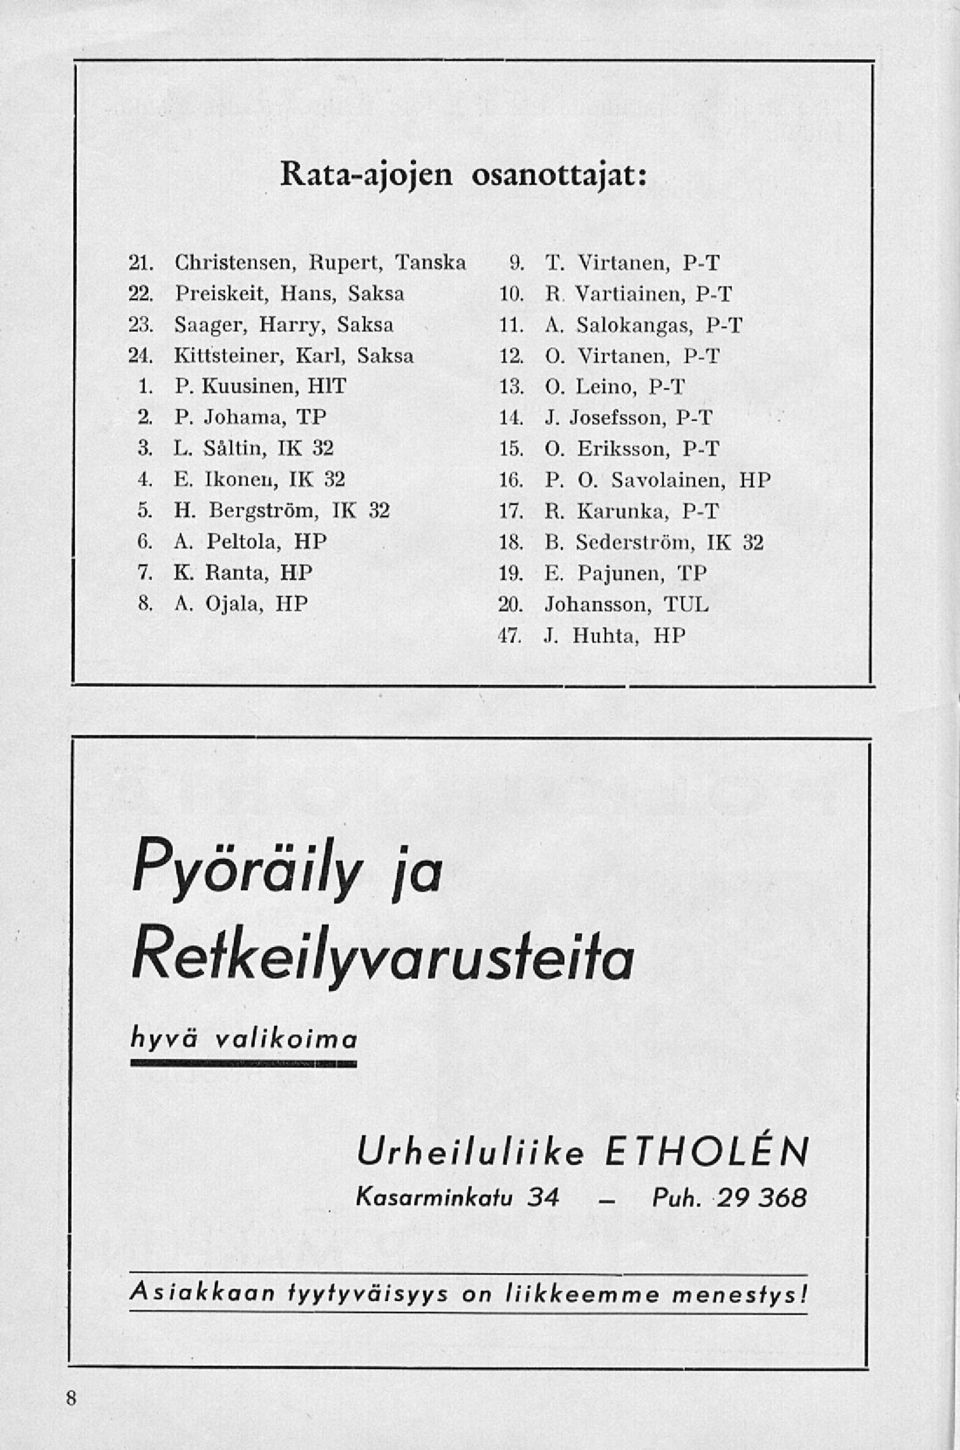 E. Ikonen, IX 32 16. P. O. Savolainen, HP 5. H. Rergström, IX 32 17. R. Karunka, P-T 6. A. Peltola, HP 18. R. Sederström, IX 32 7. K. Ranta, HP 19. E. Pajunen, TP 8. A. Ojala, HP 20.